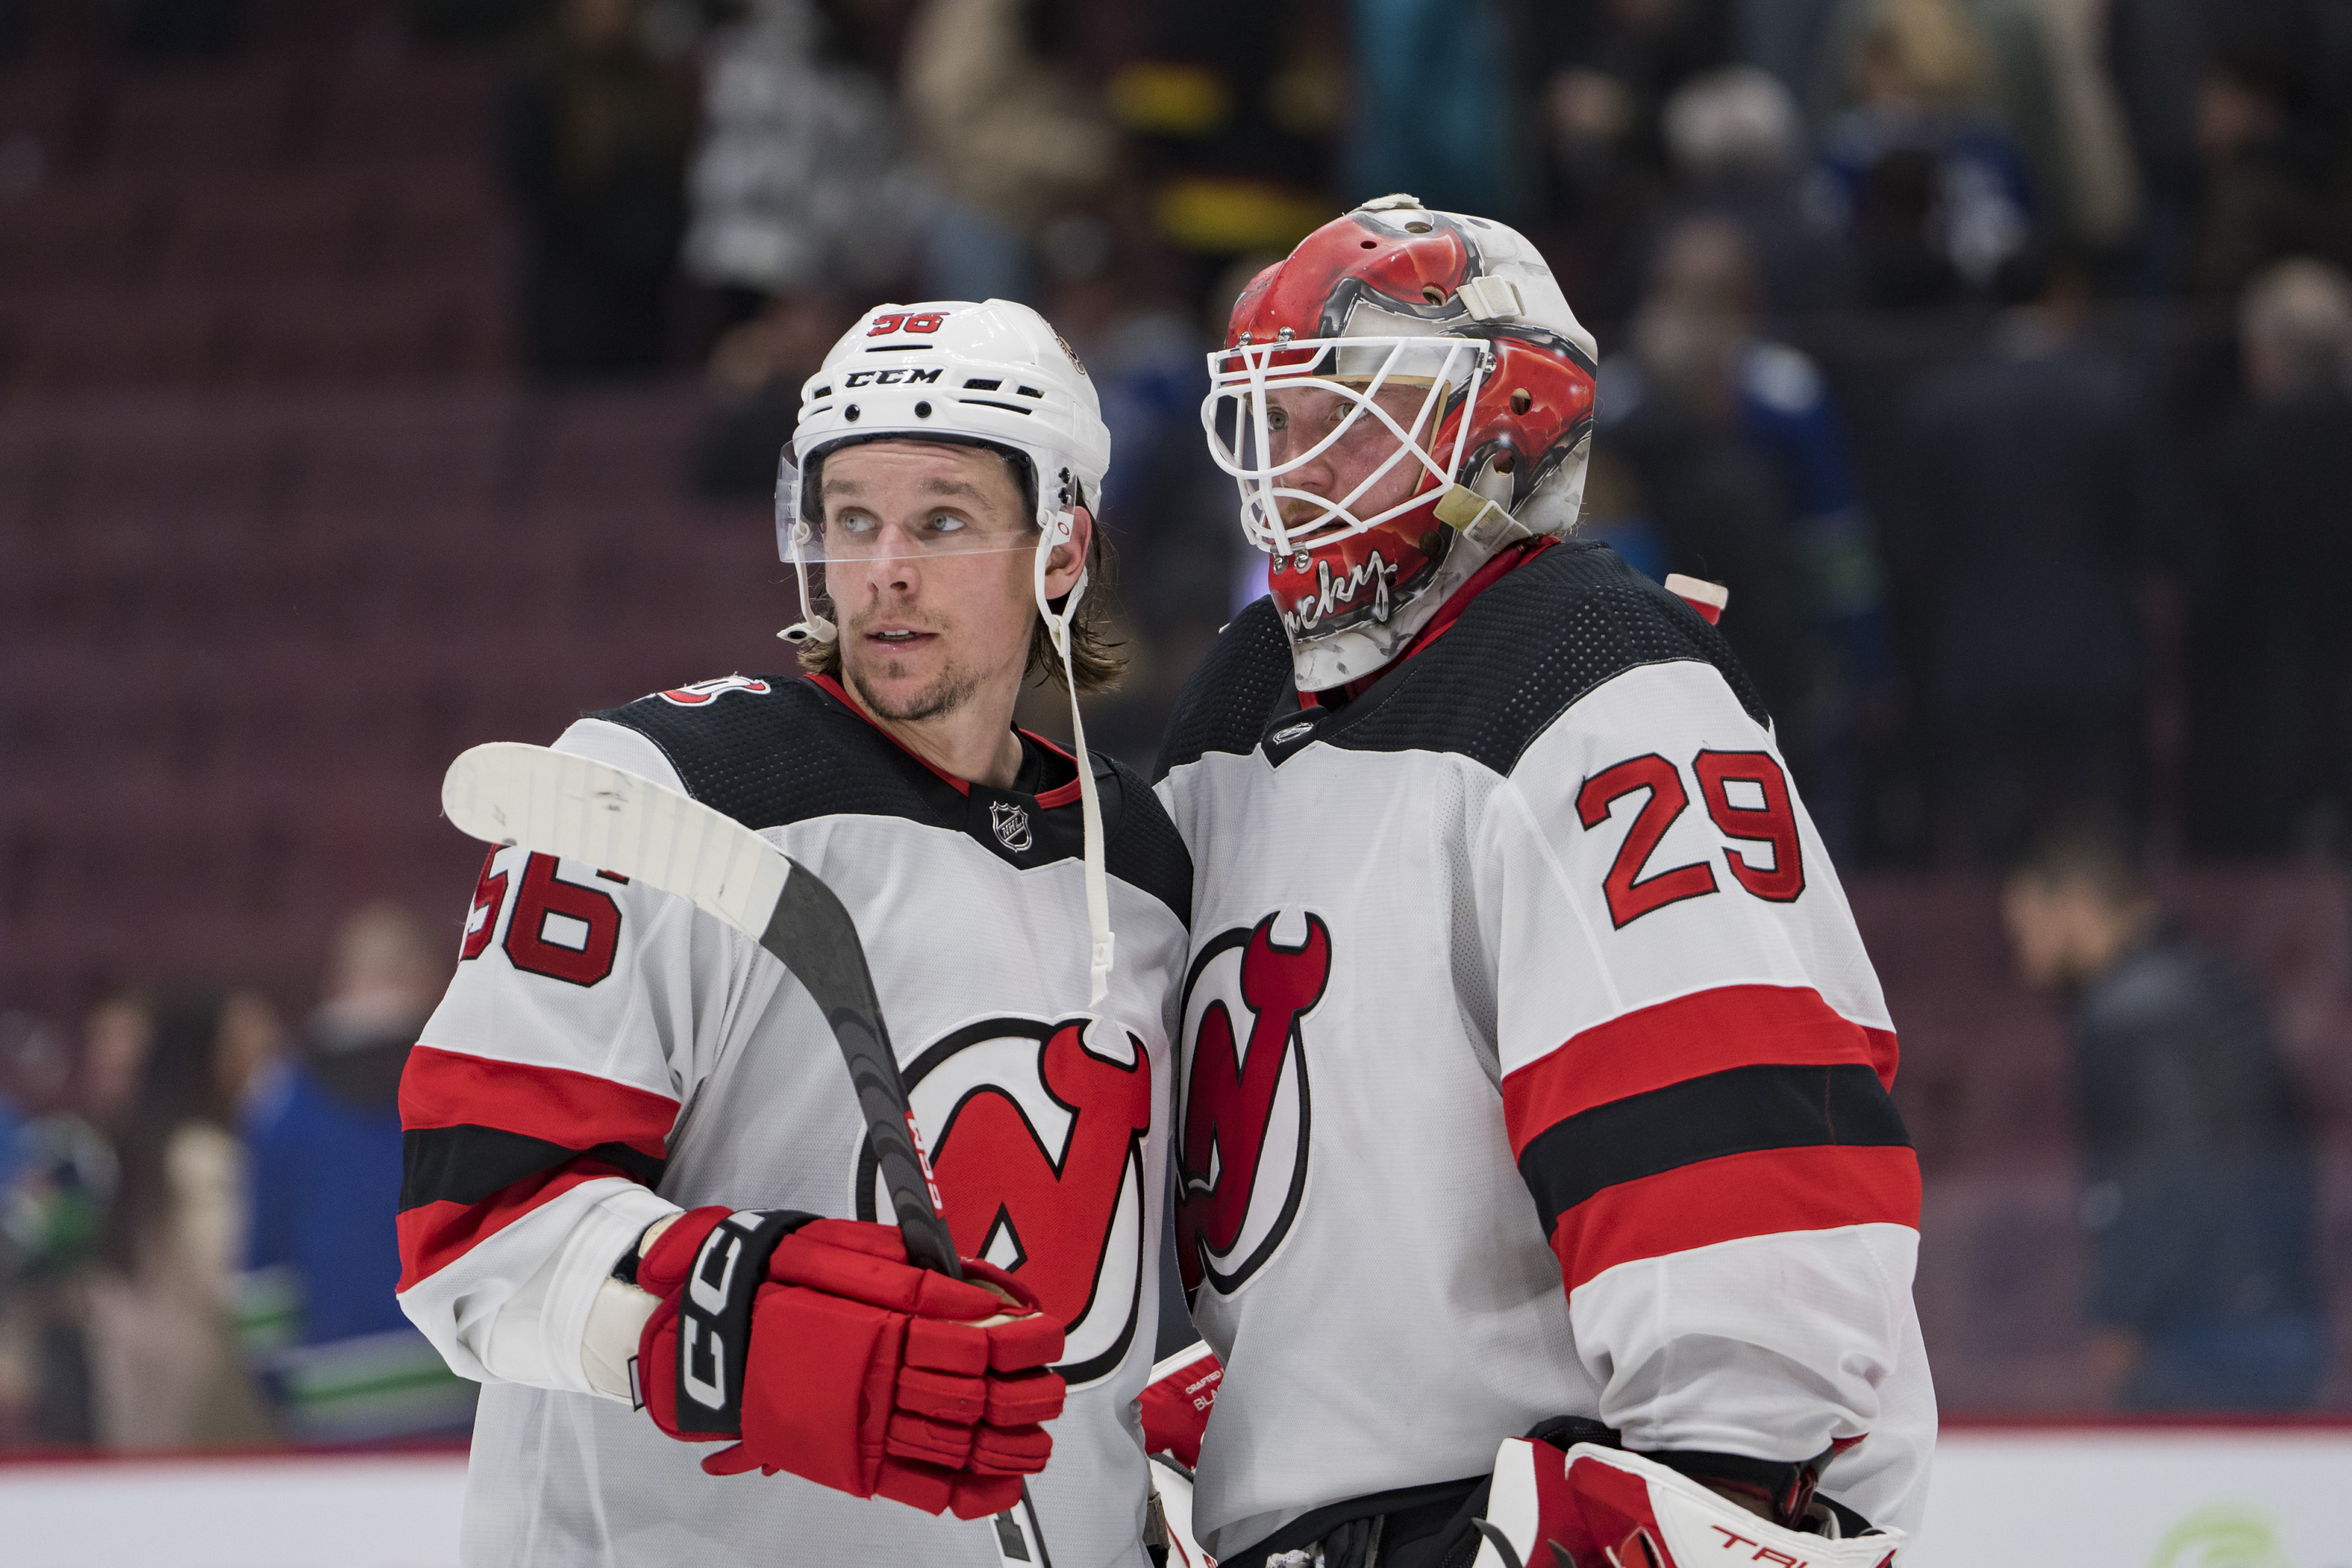 New Jersey Devils: Top 10 Prospects Entering the 2018 Season